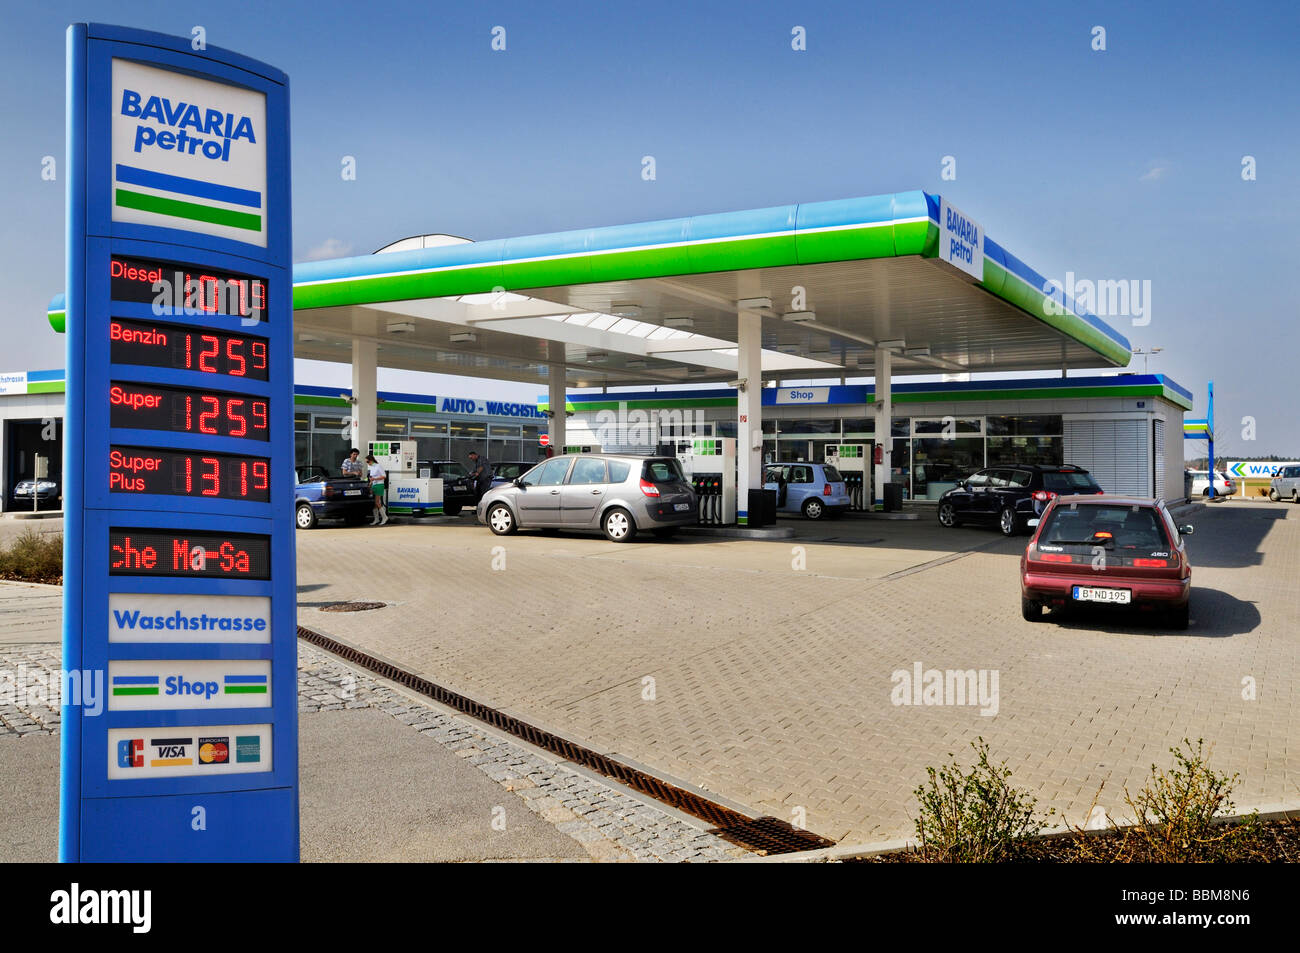 Bavaria petrol station, Munich, Bavaria, Germany, Europe Stock Photo